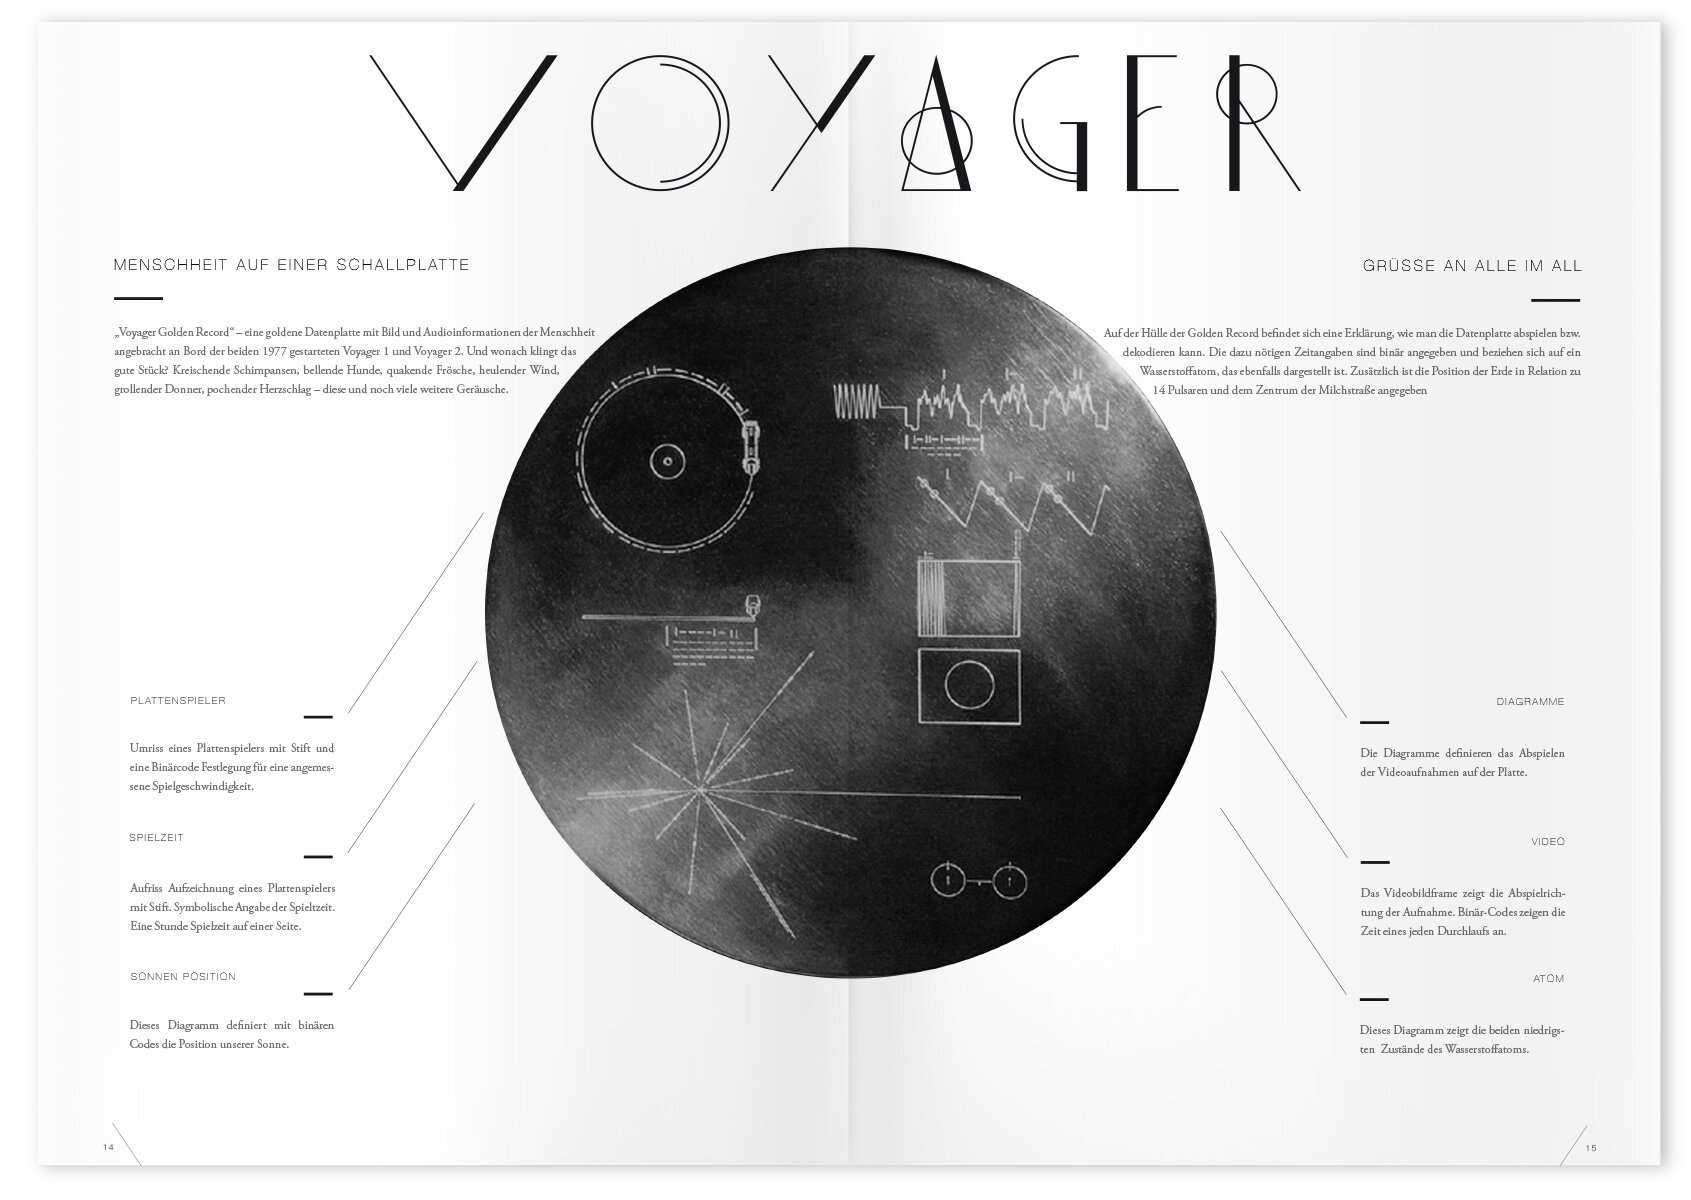 02_Cosmos-Magazin_hsrm-Hochschule-RheinMain_Editorial-Design_Grafikdesign_Gloria-Kison.jpg